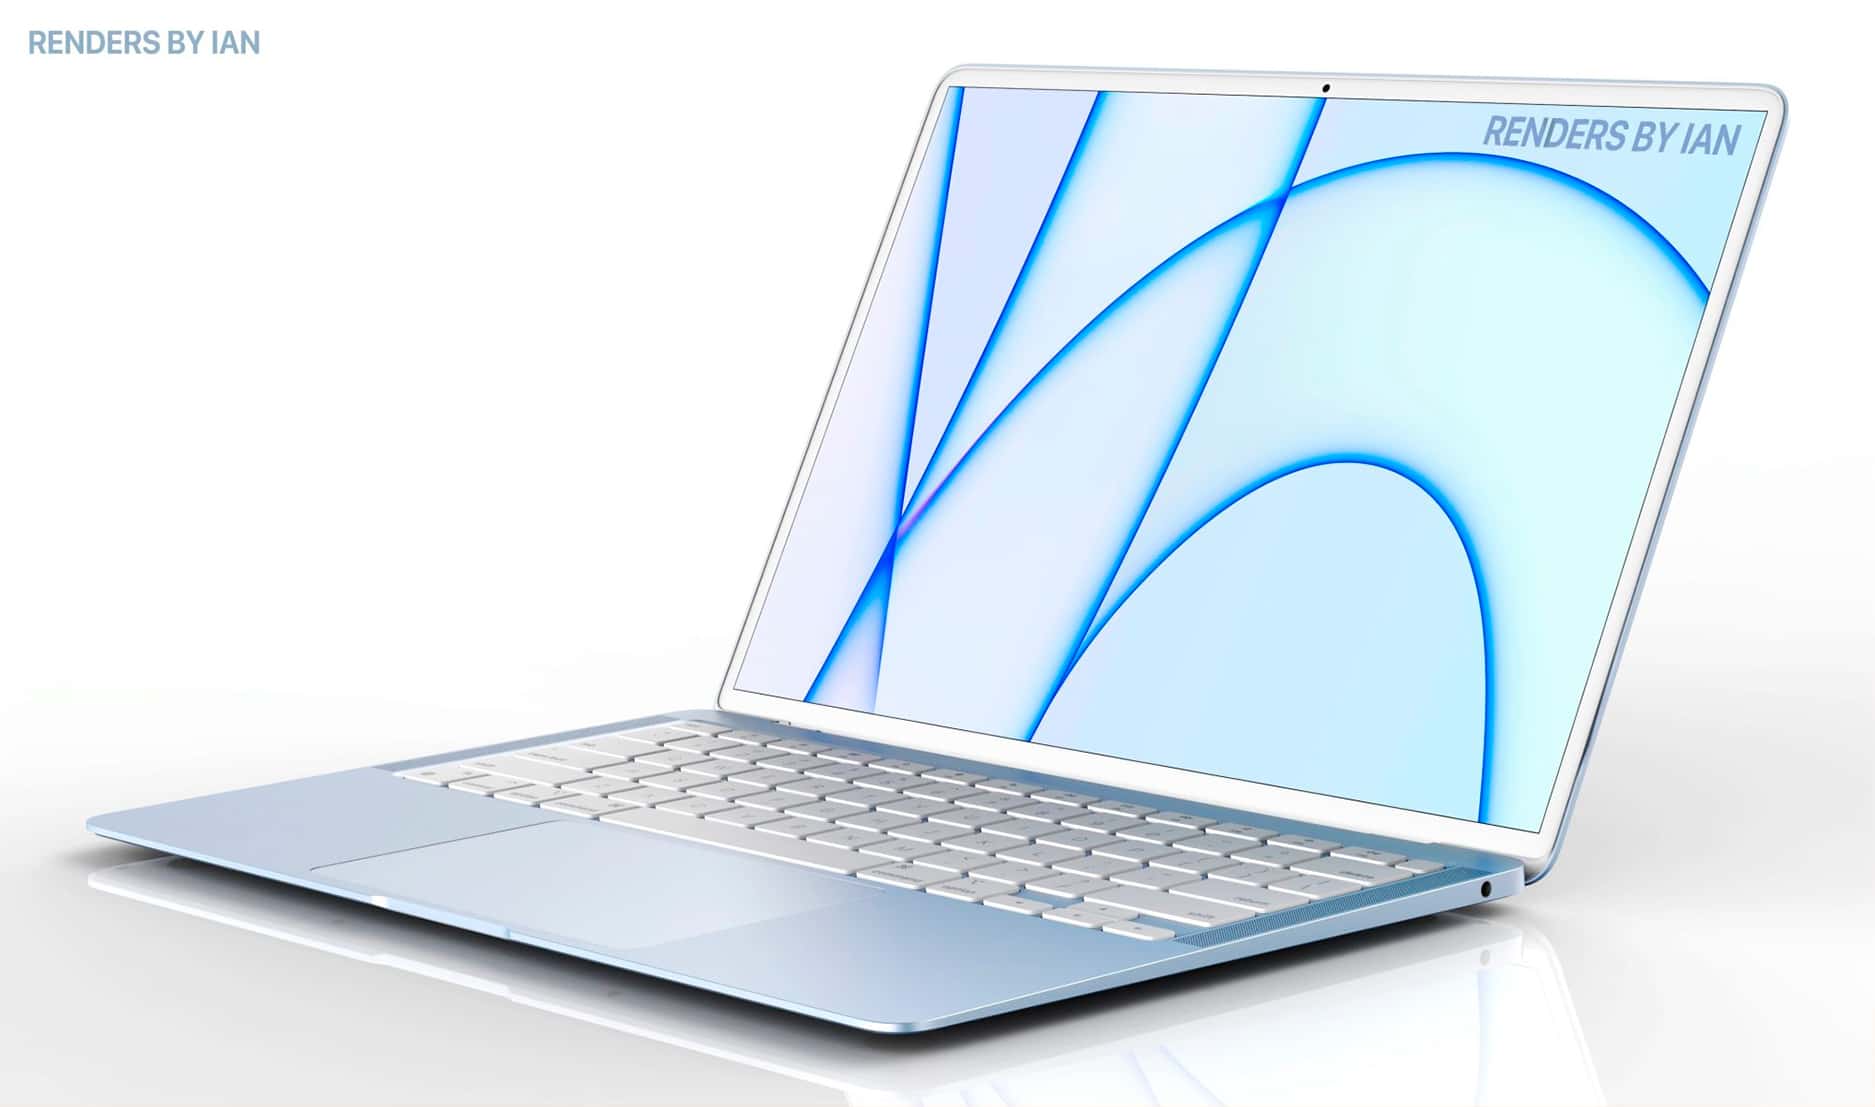 Leaker sugere MacBook Air com SoC Apple M2 e colorido. Imagem: "Renders By Ian" Zelbo,